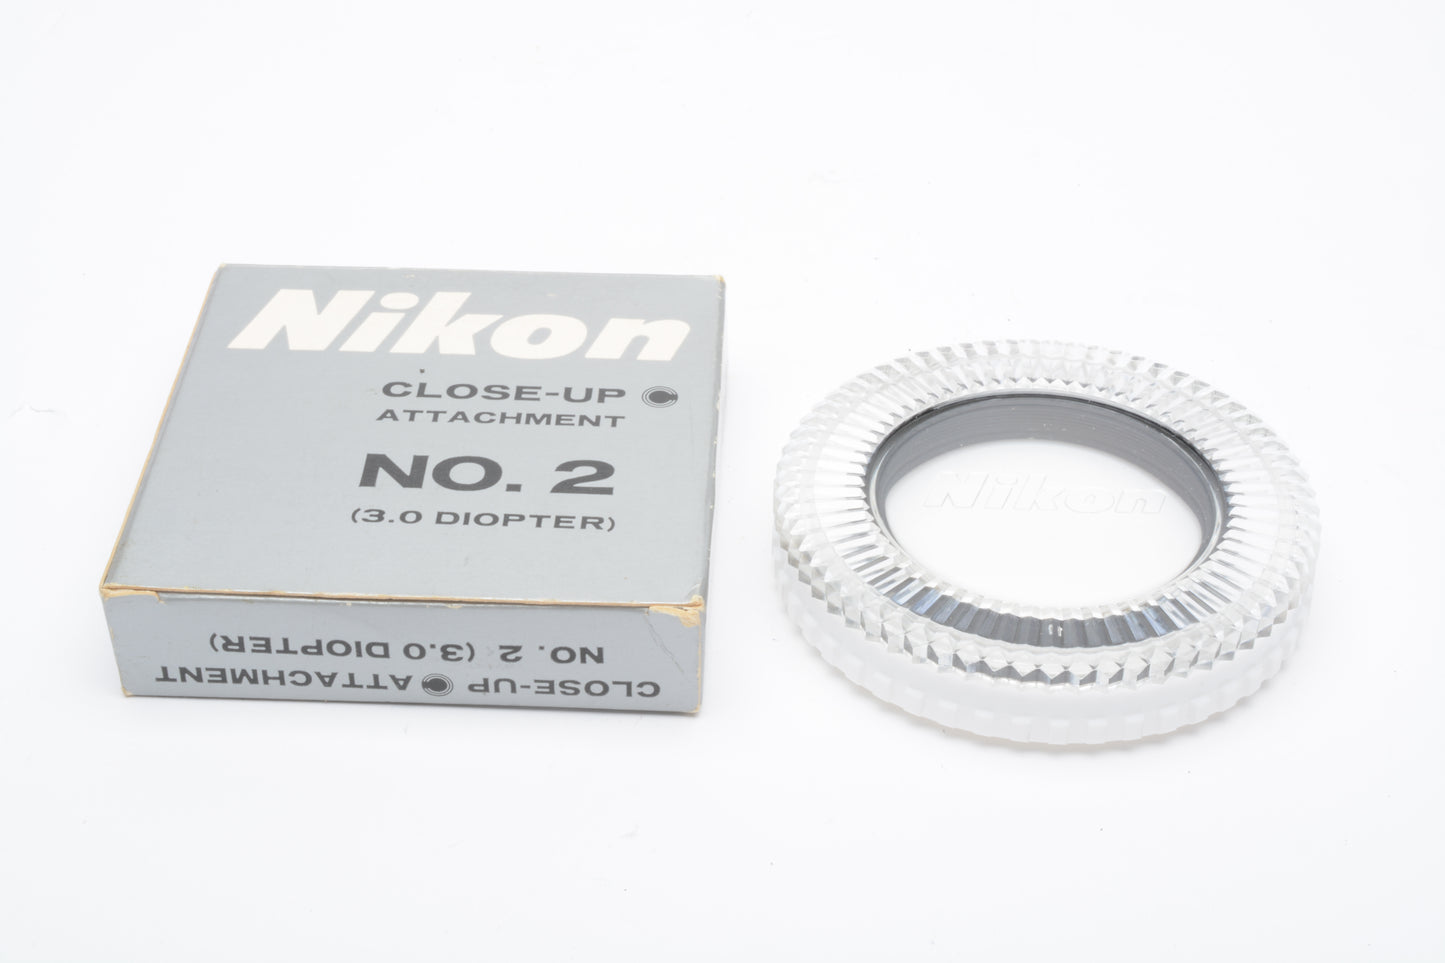 Nikon Close-Up Attachment No. 2 (3.0 Diopter) 52mm - NIB